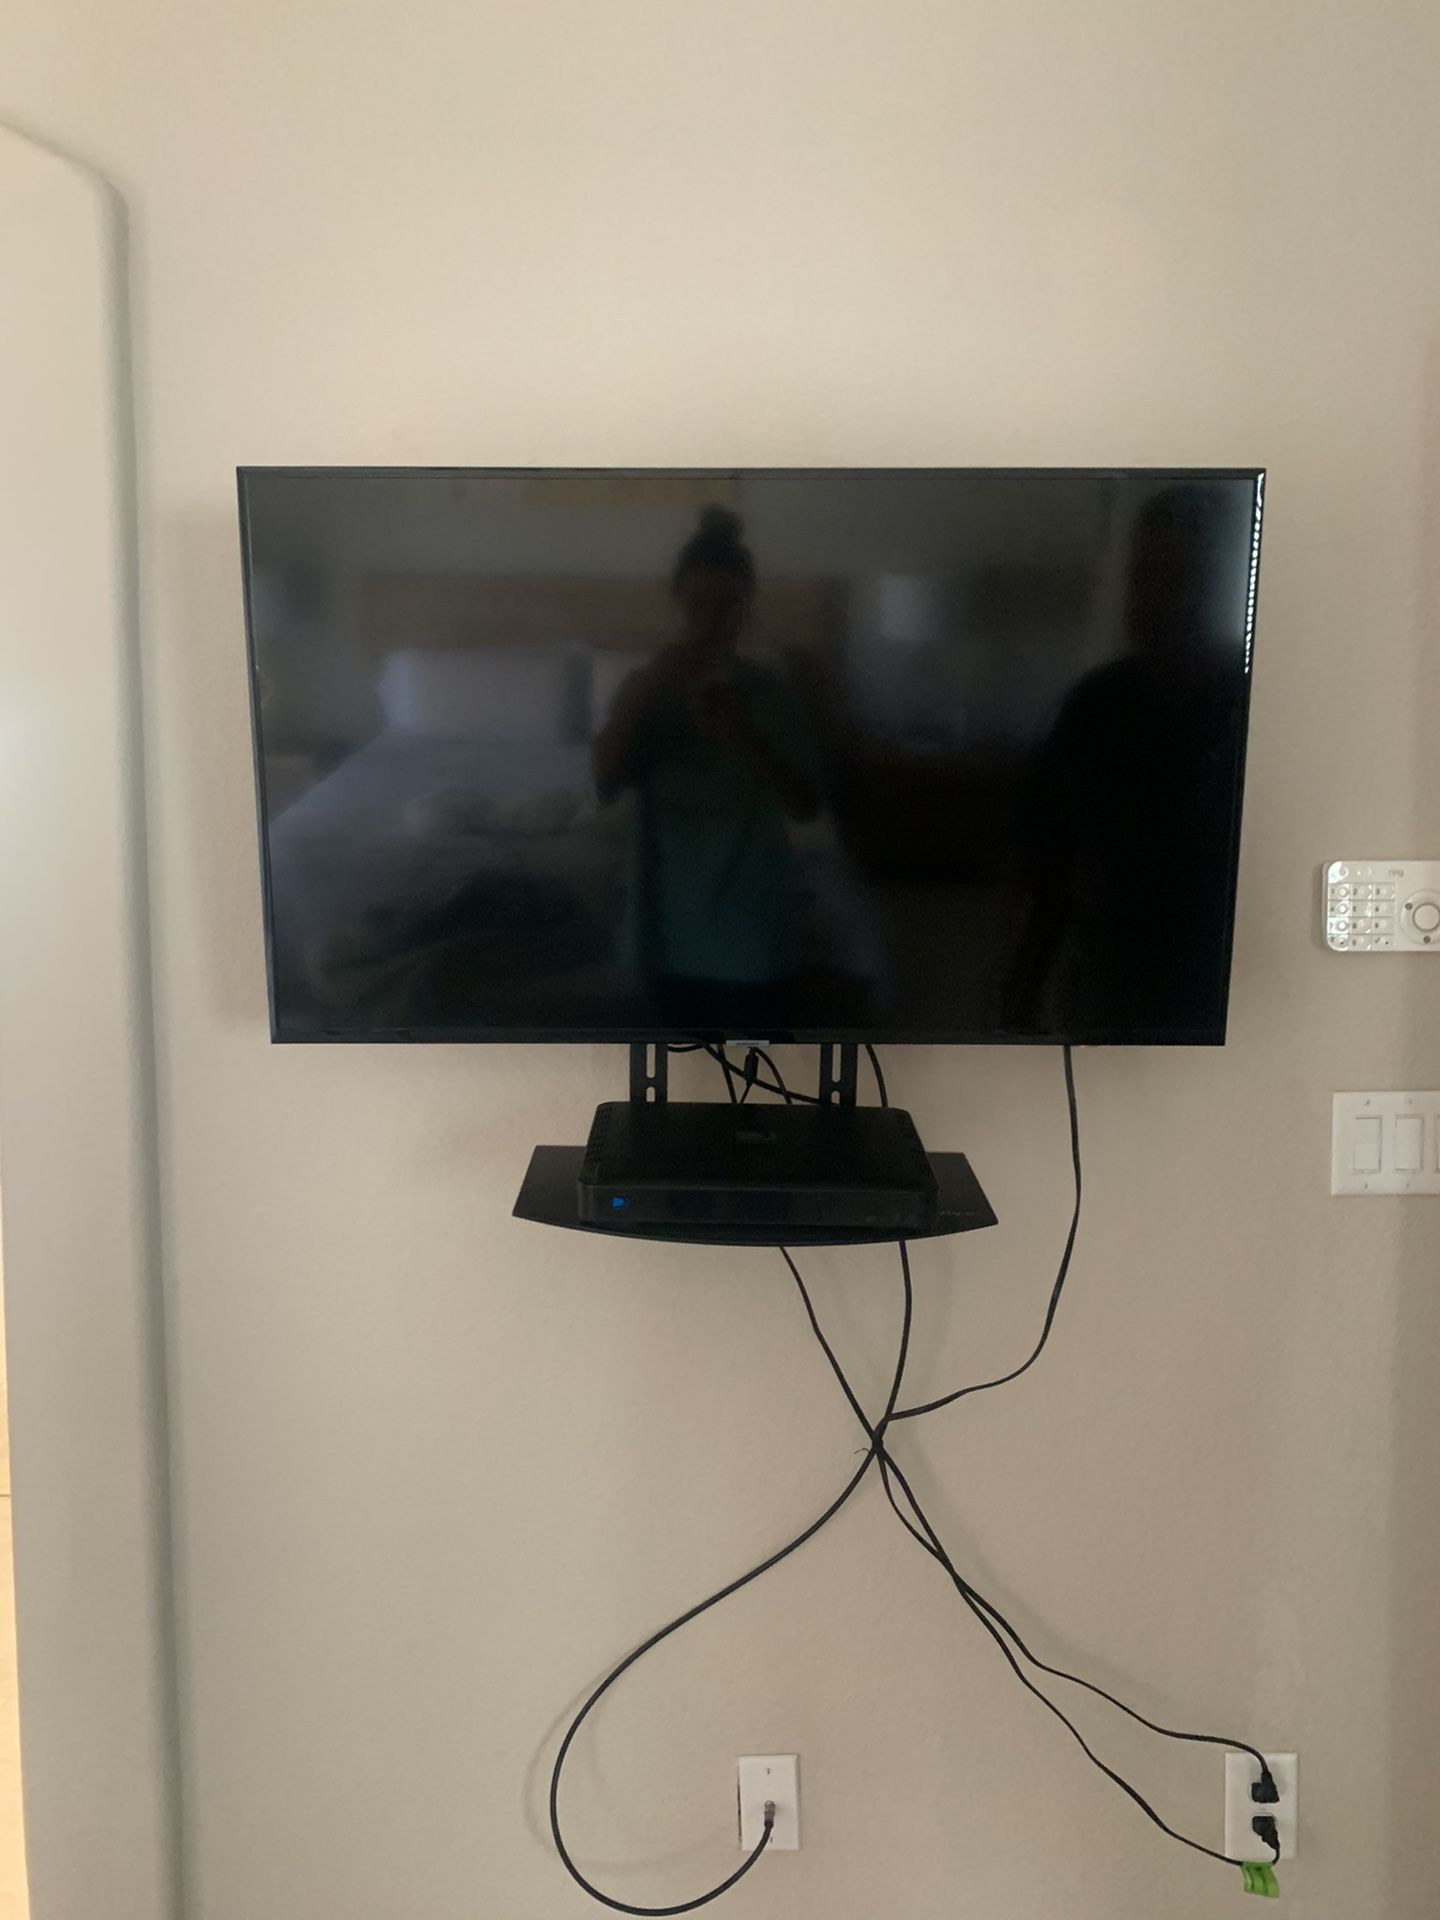 42” perfect condition Samsung smart TV